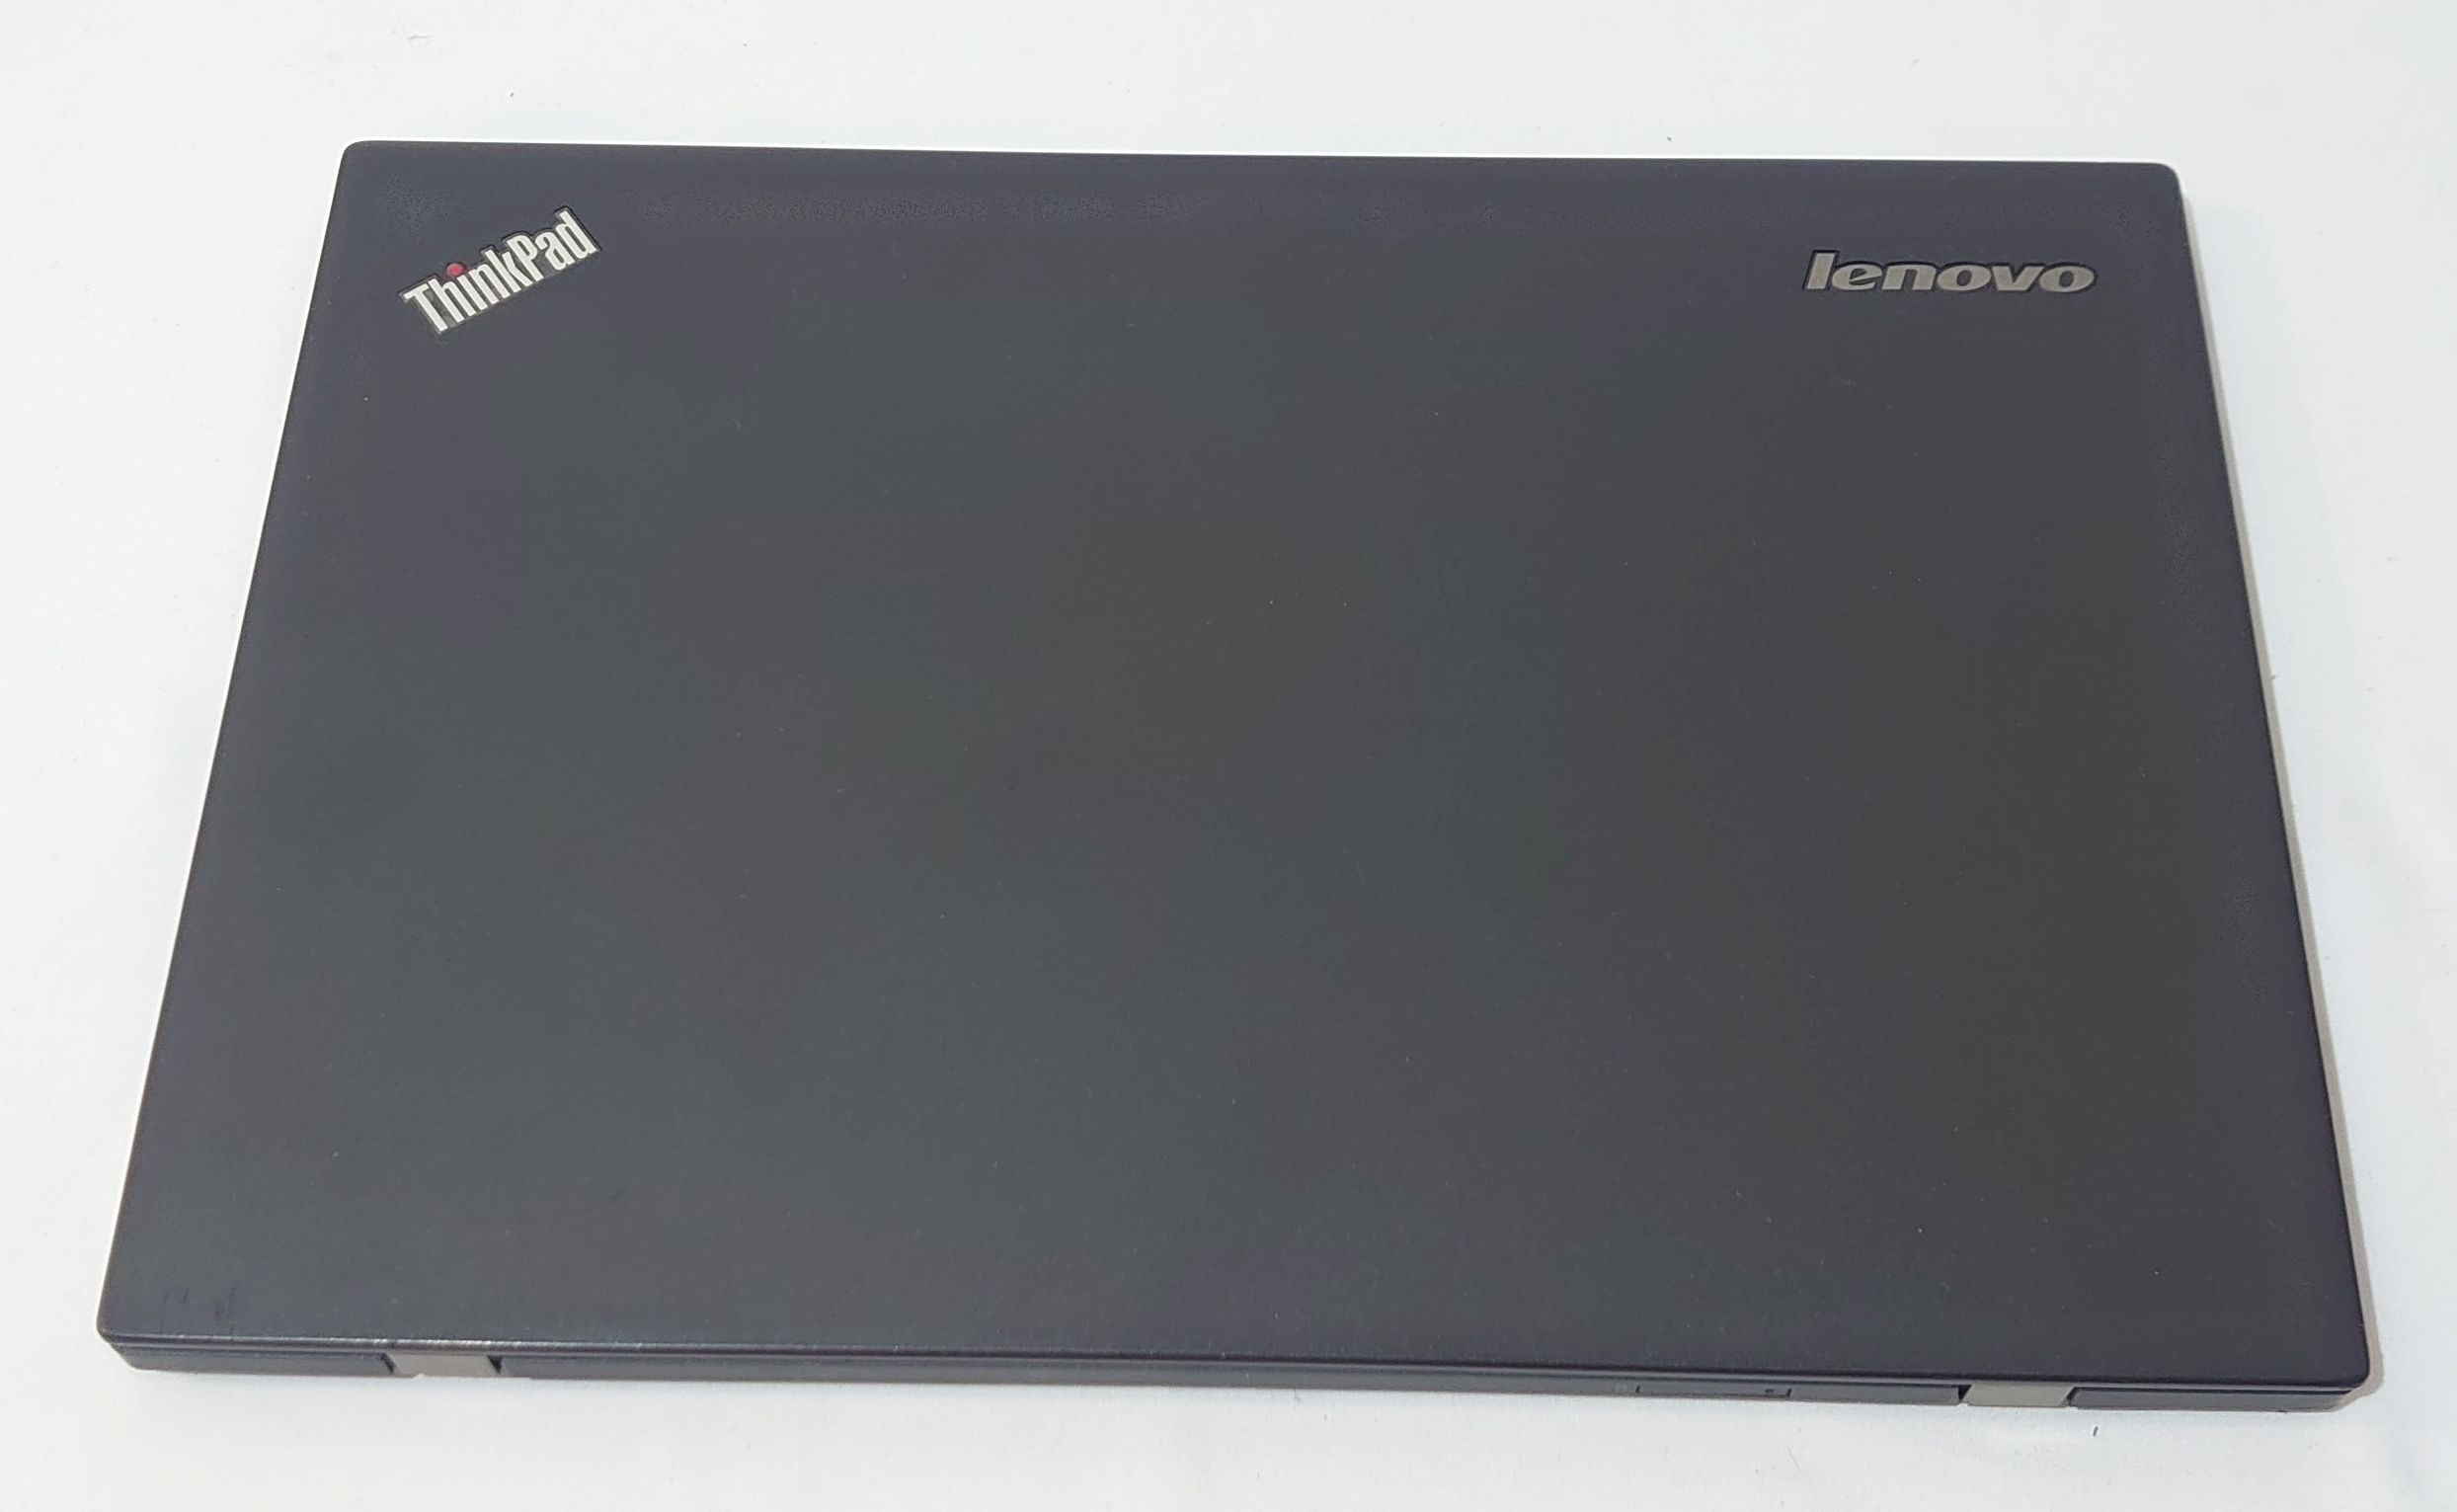 Lenovo ThinkPad X1 Carbon i5, 8GB RAM (LO164)